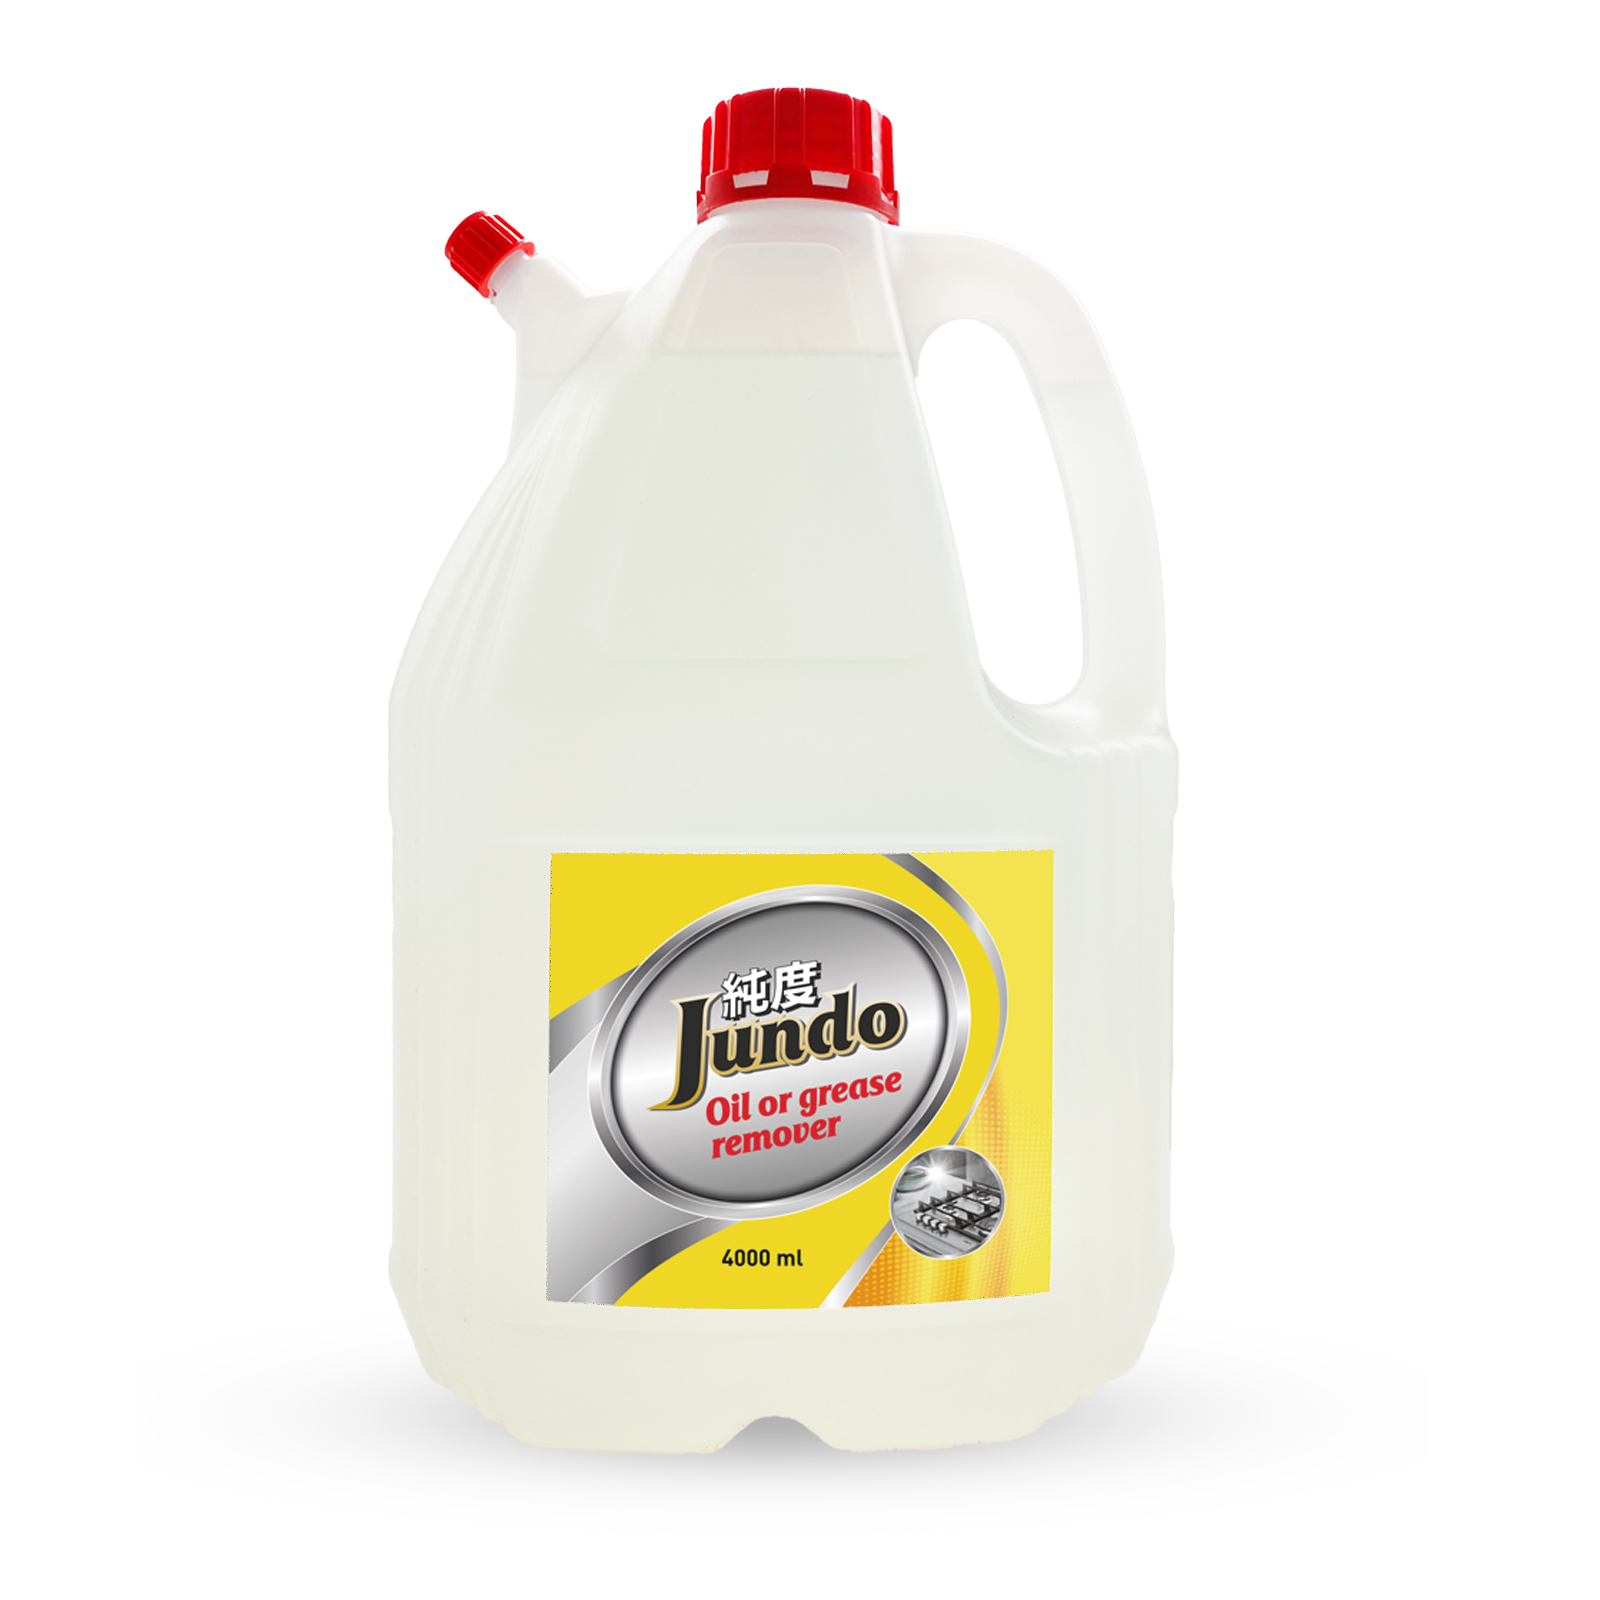 Жироудалитель концентрированный Jundo Oil or grease remover 4 л